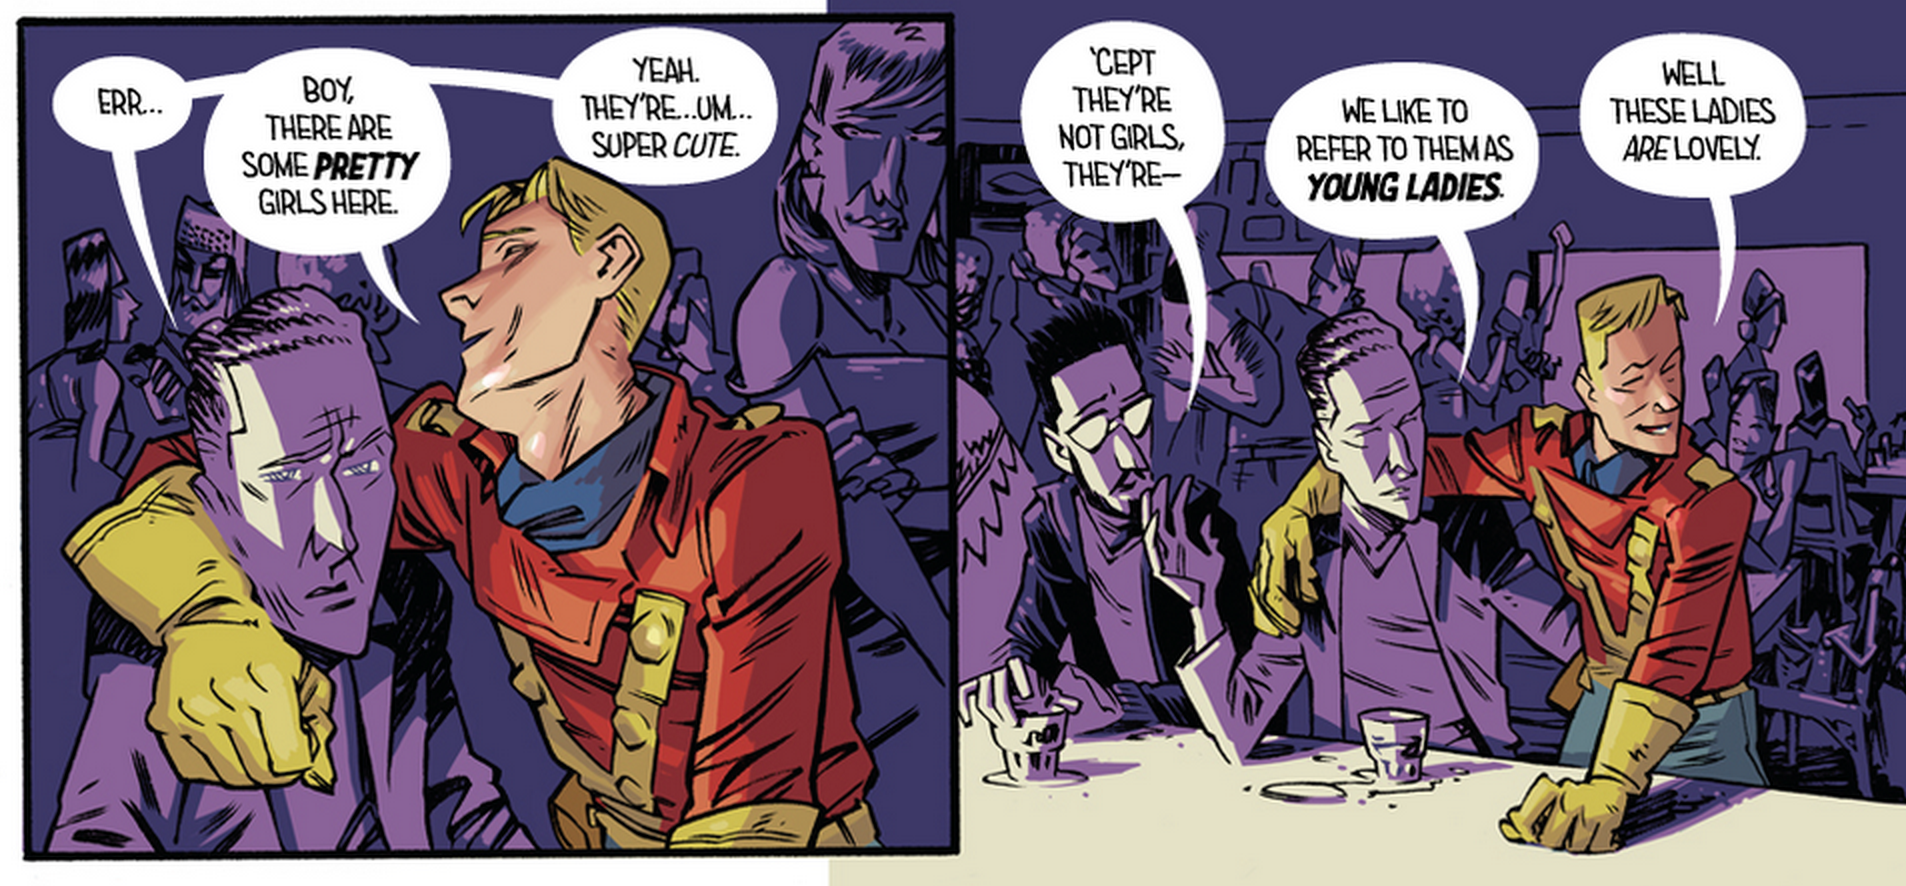 Image Comics' Airboy #2 Has Dumb Transmisogynistic Jokes | The Mary Sue